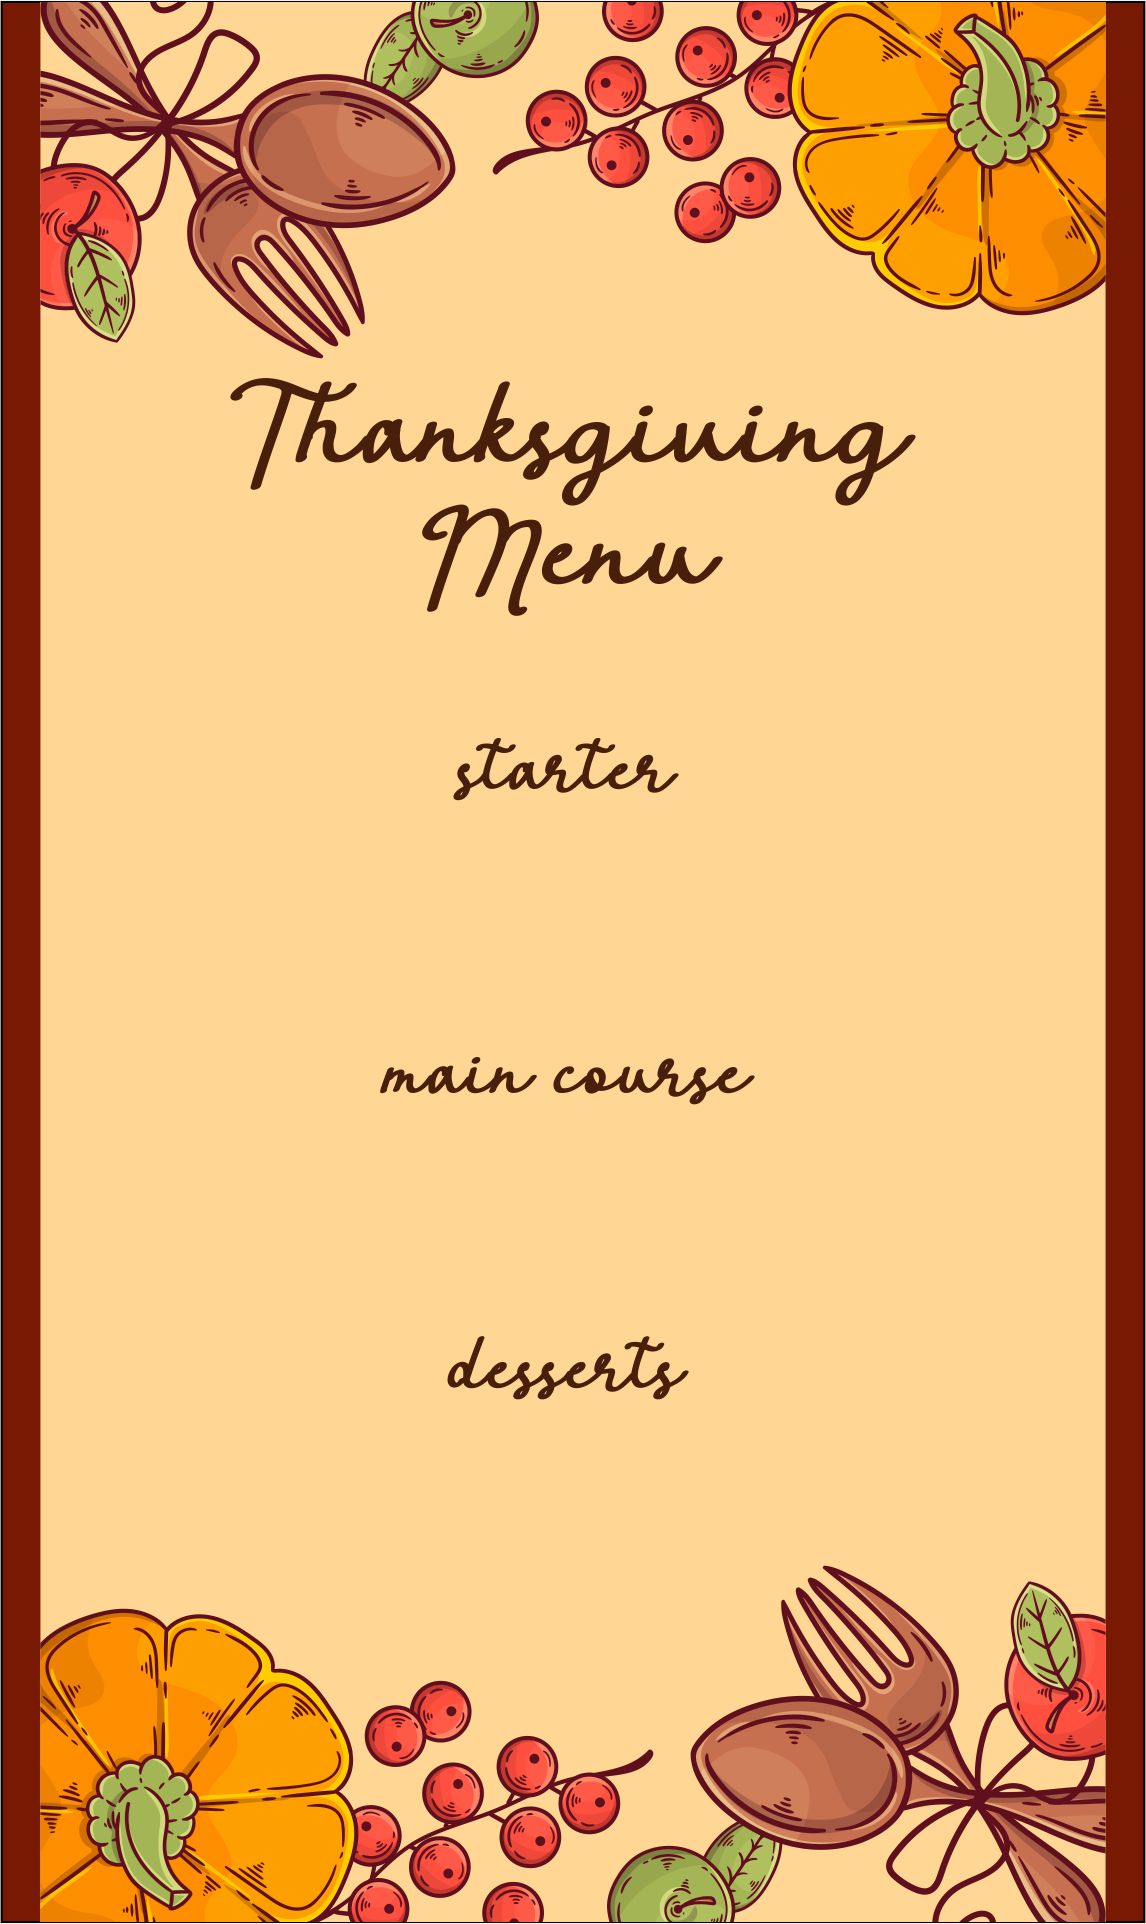 Thanksgiving Food Menu For Holiday Dinner Celebration